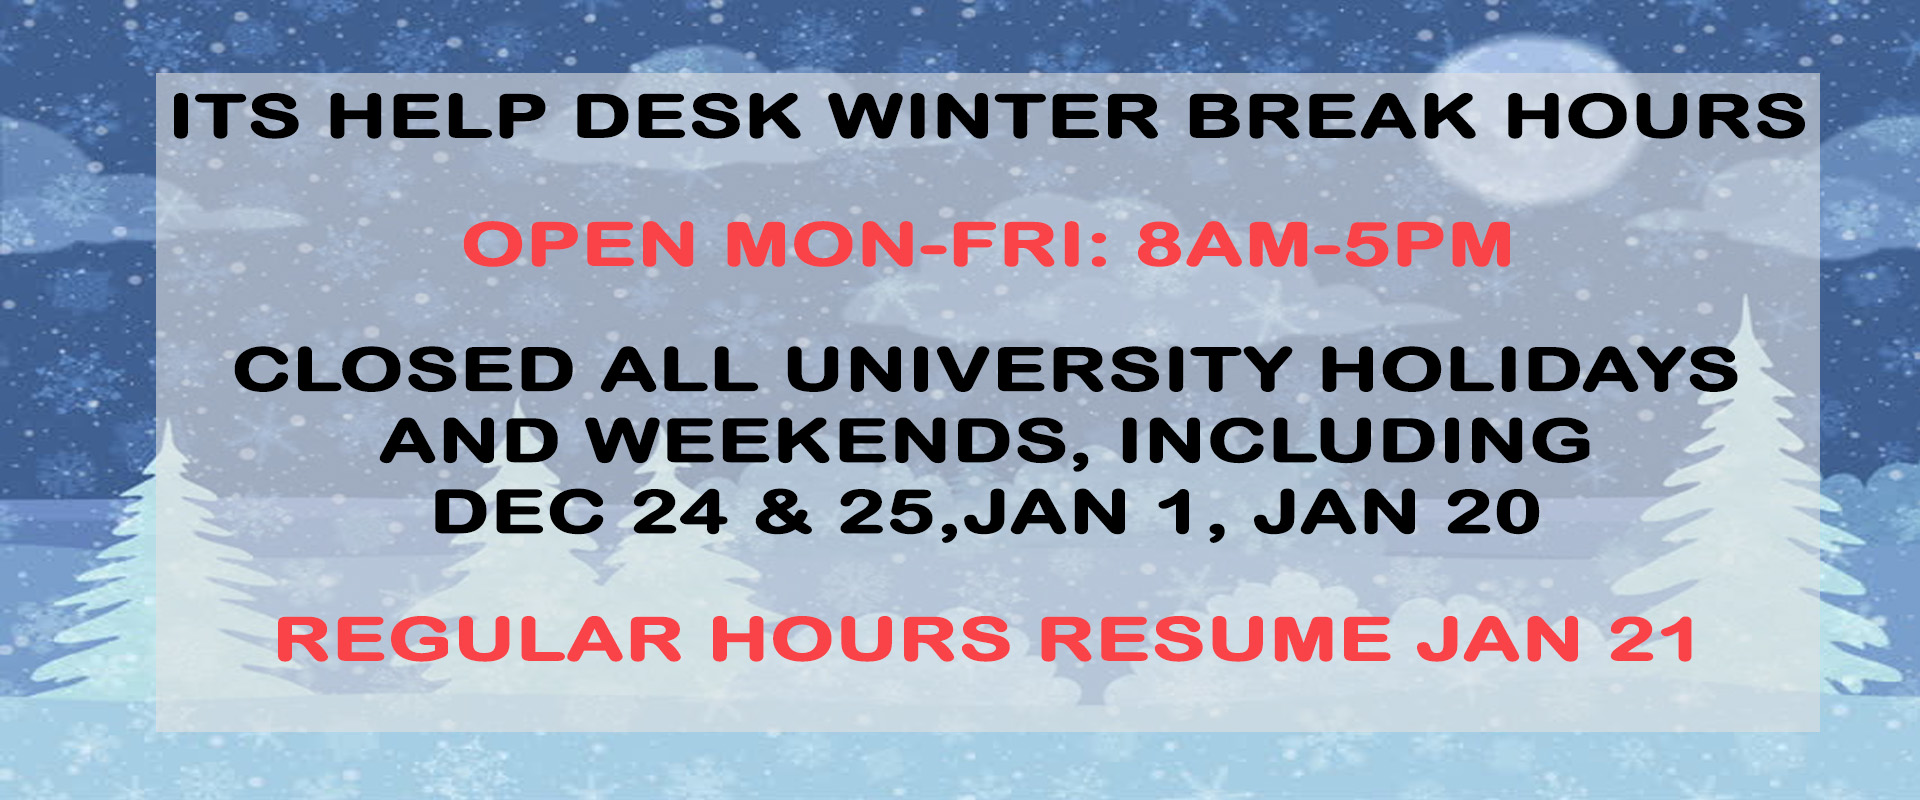 Help Desk Winter Break Hours